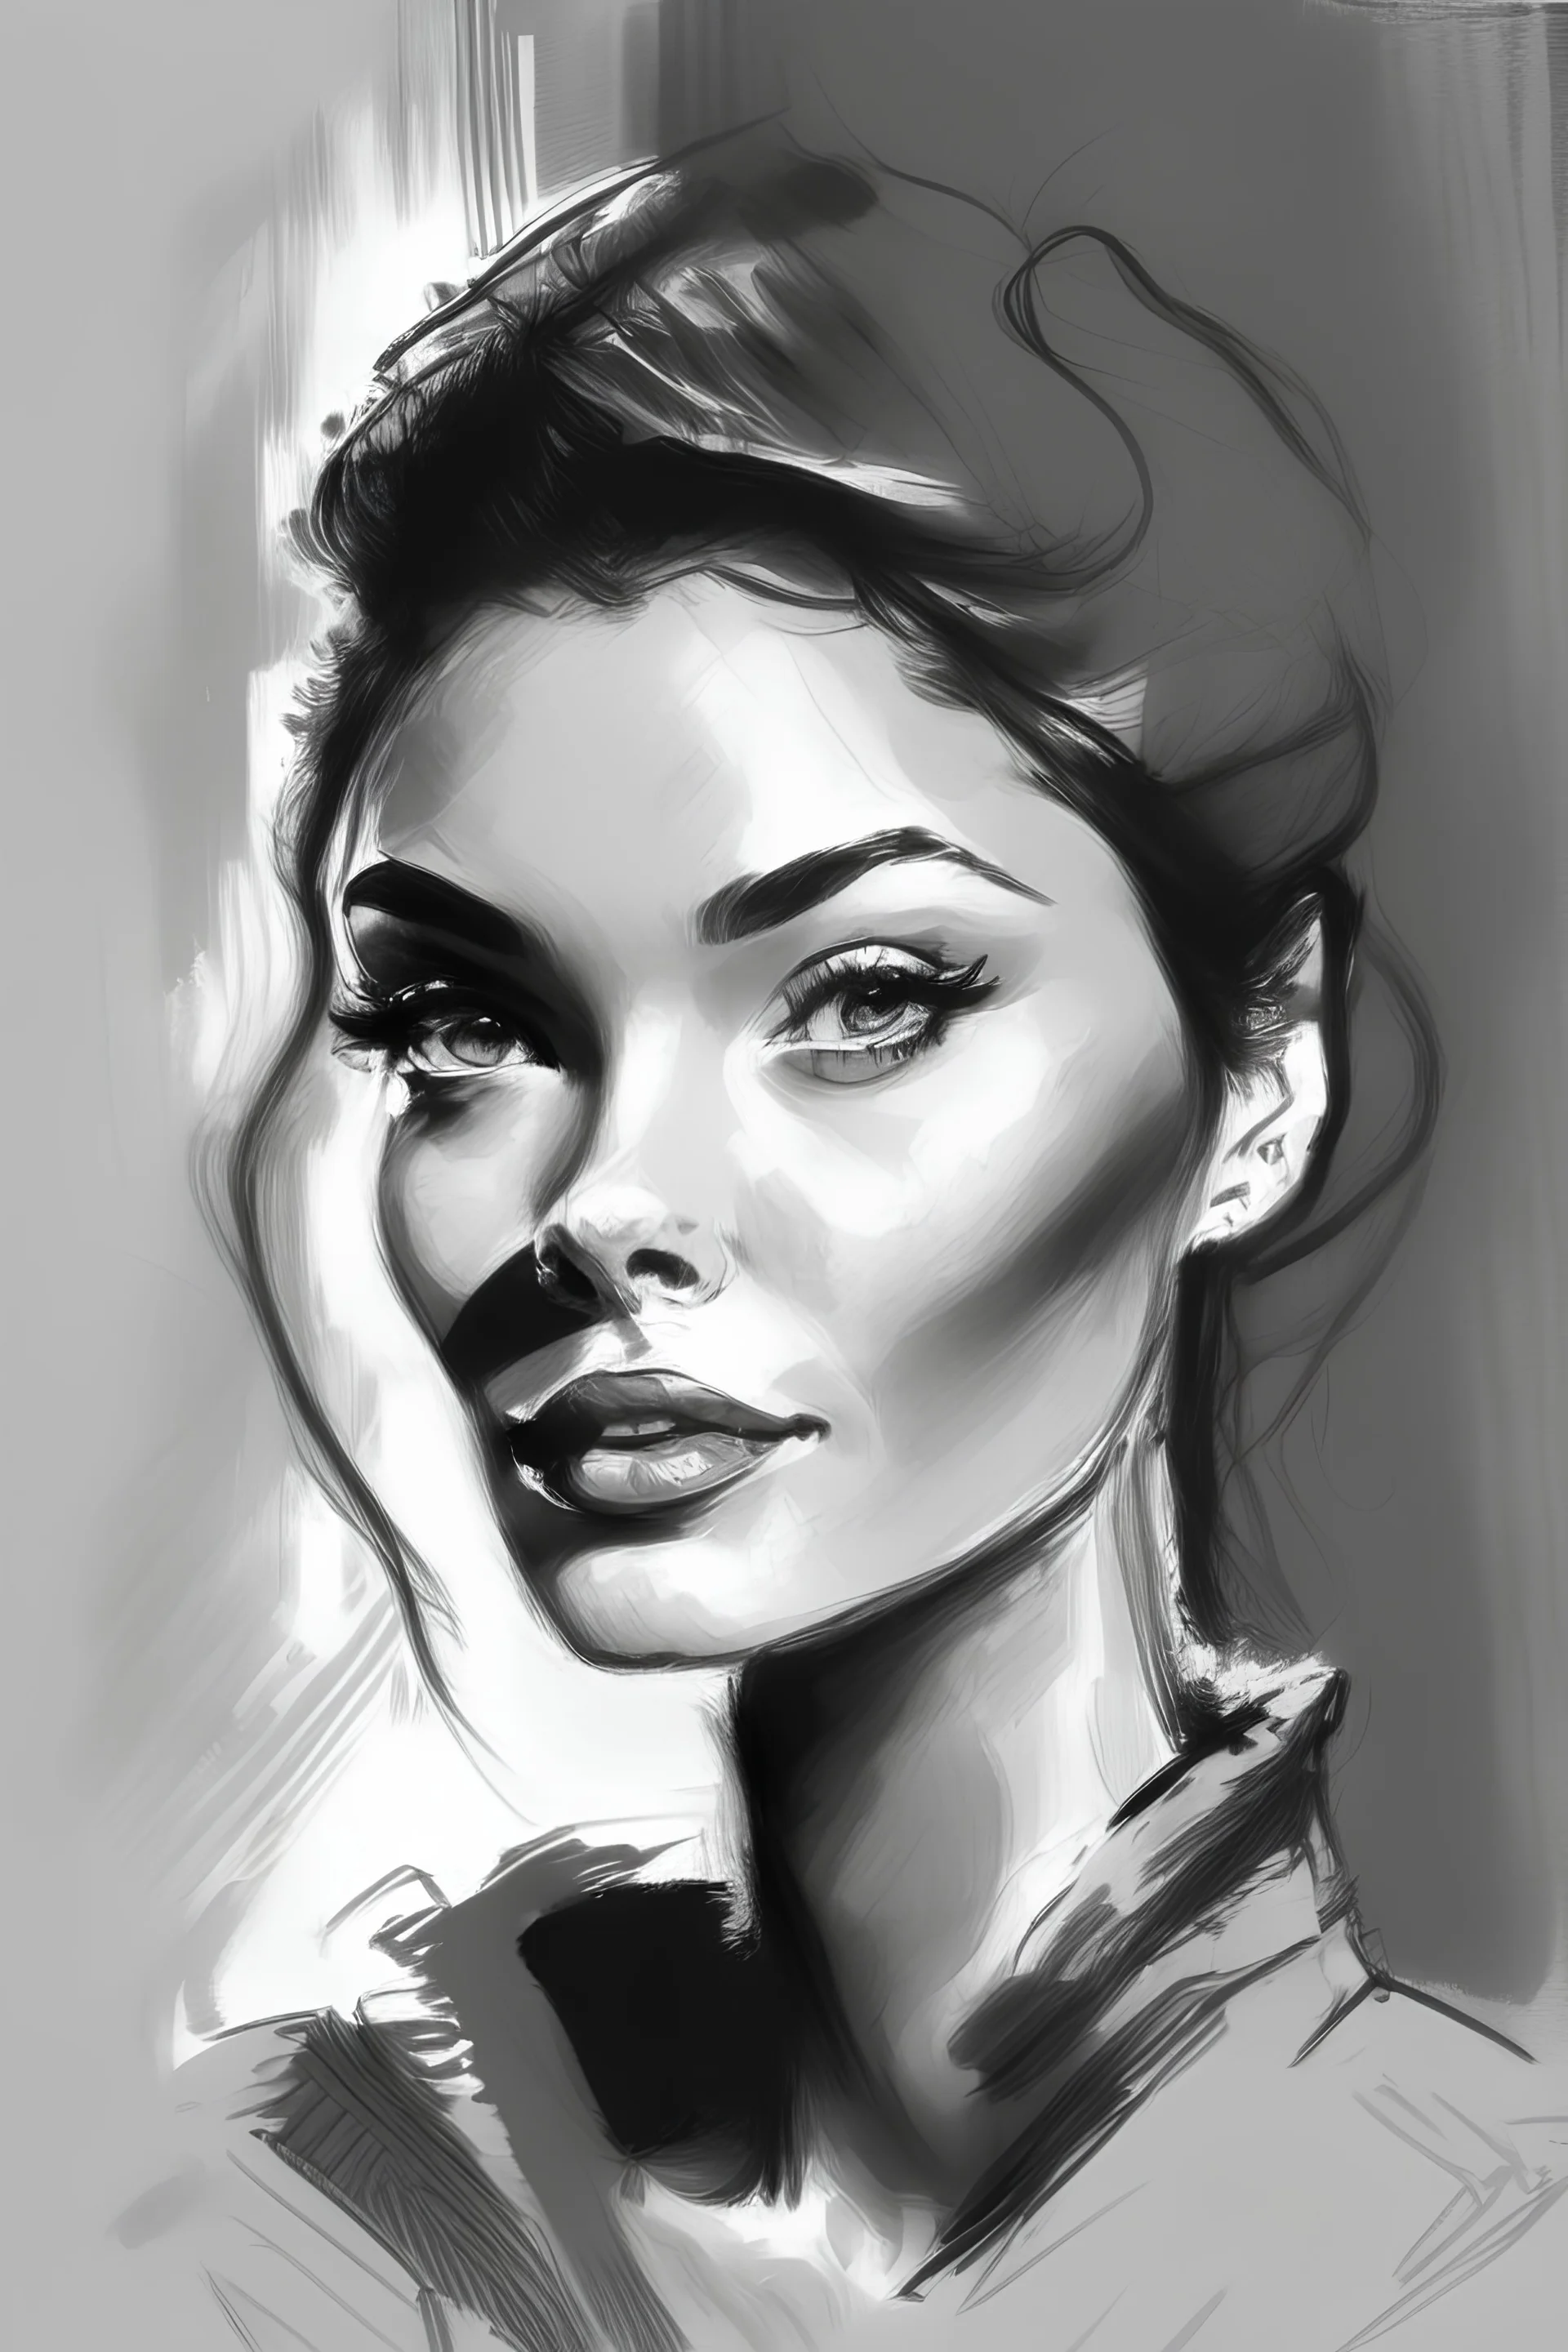 portrait of a woman sketch style